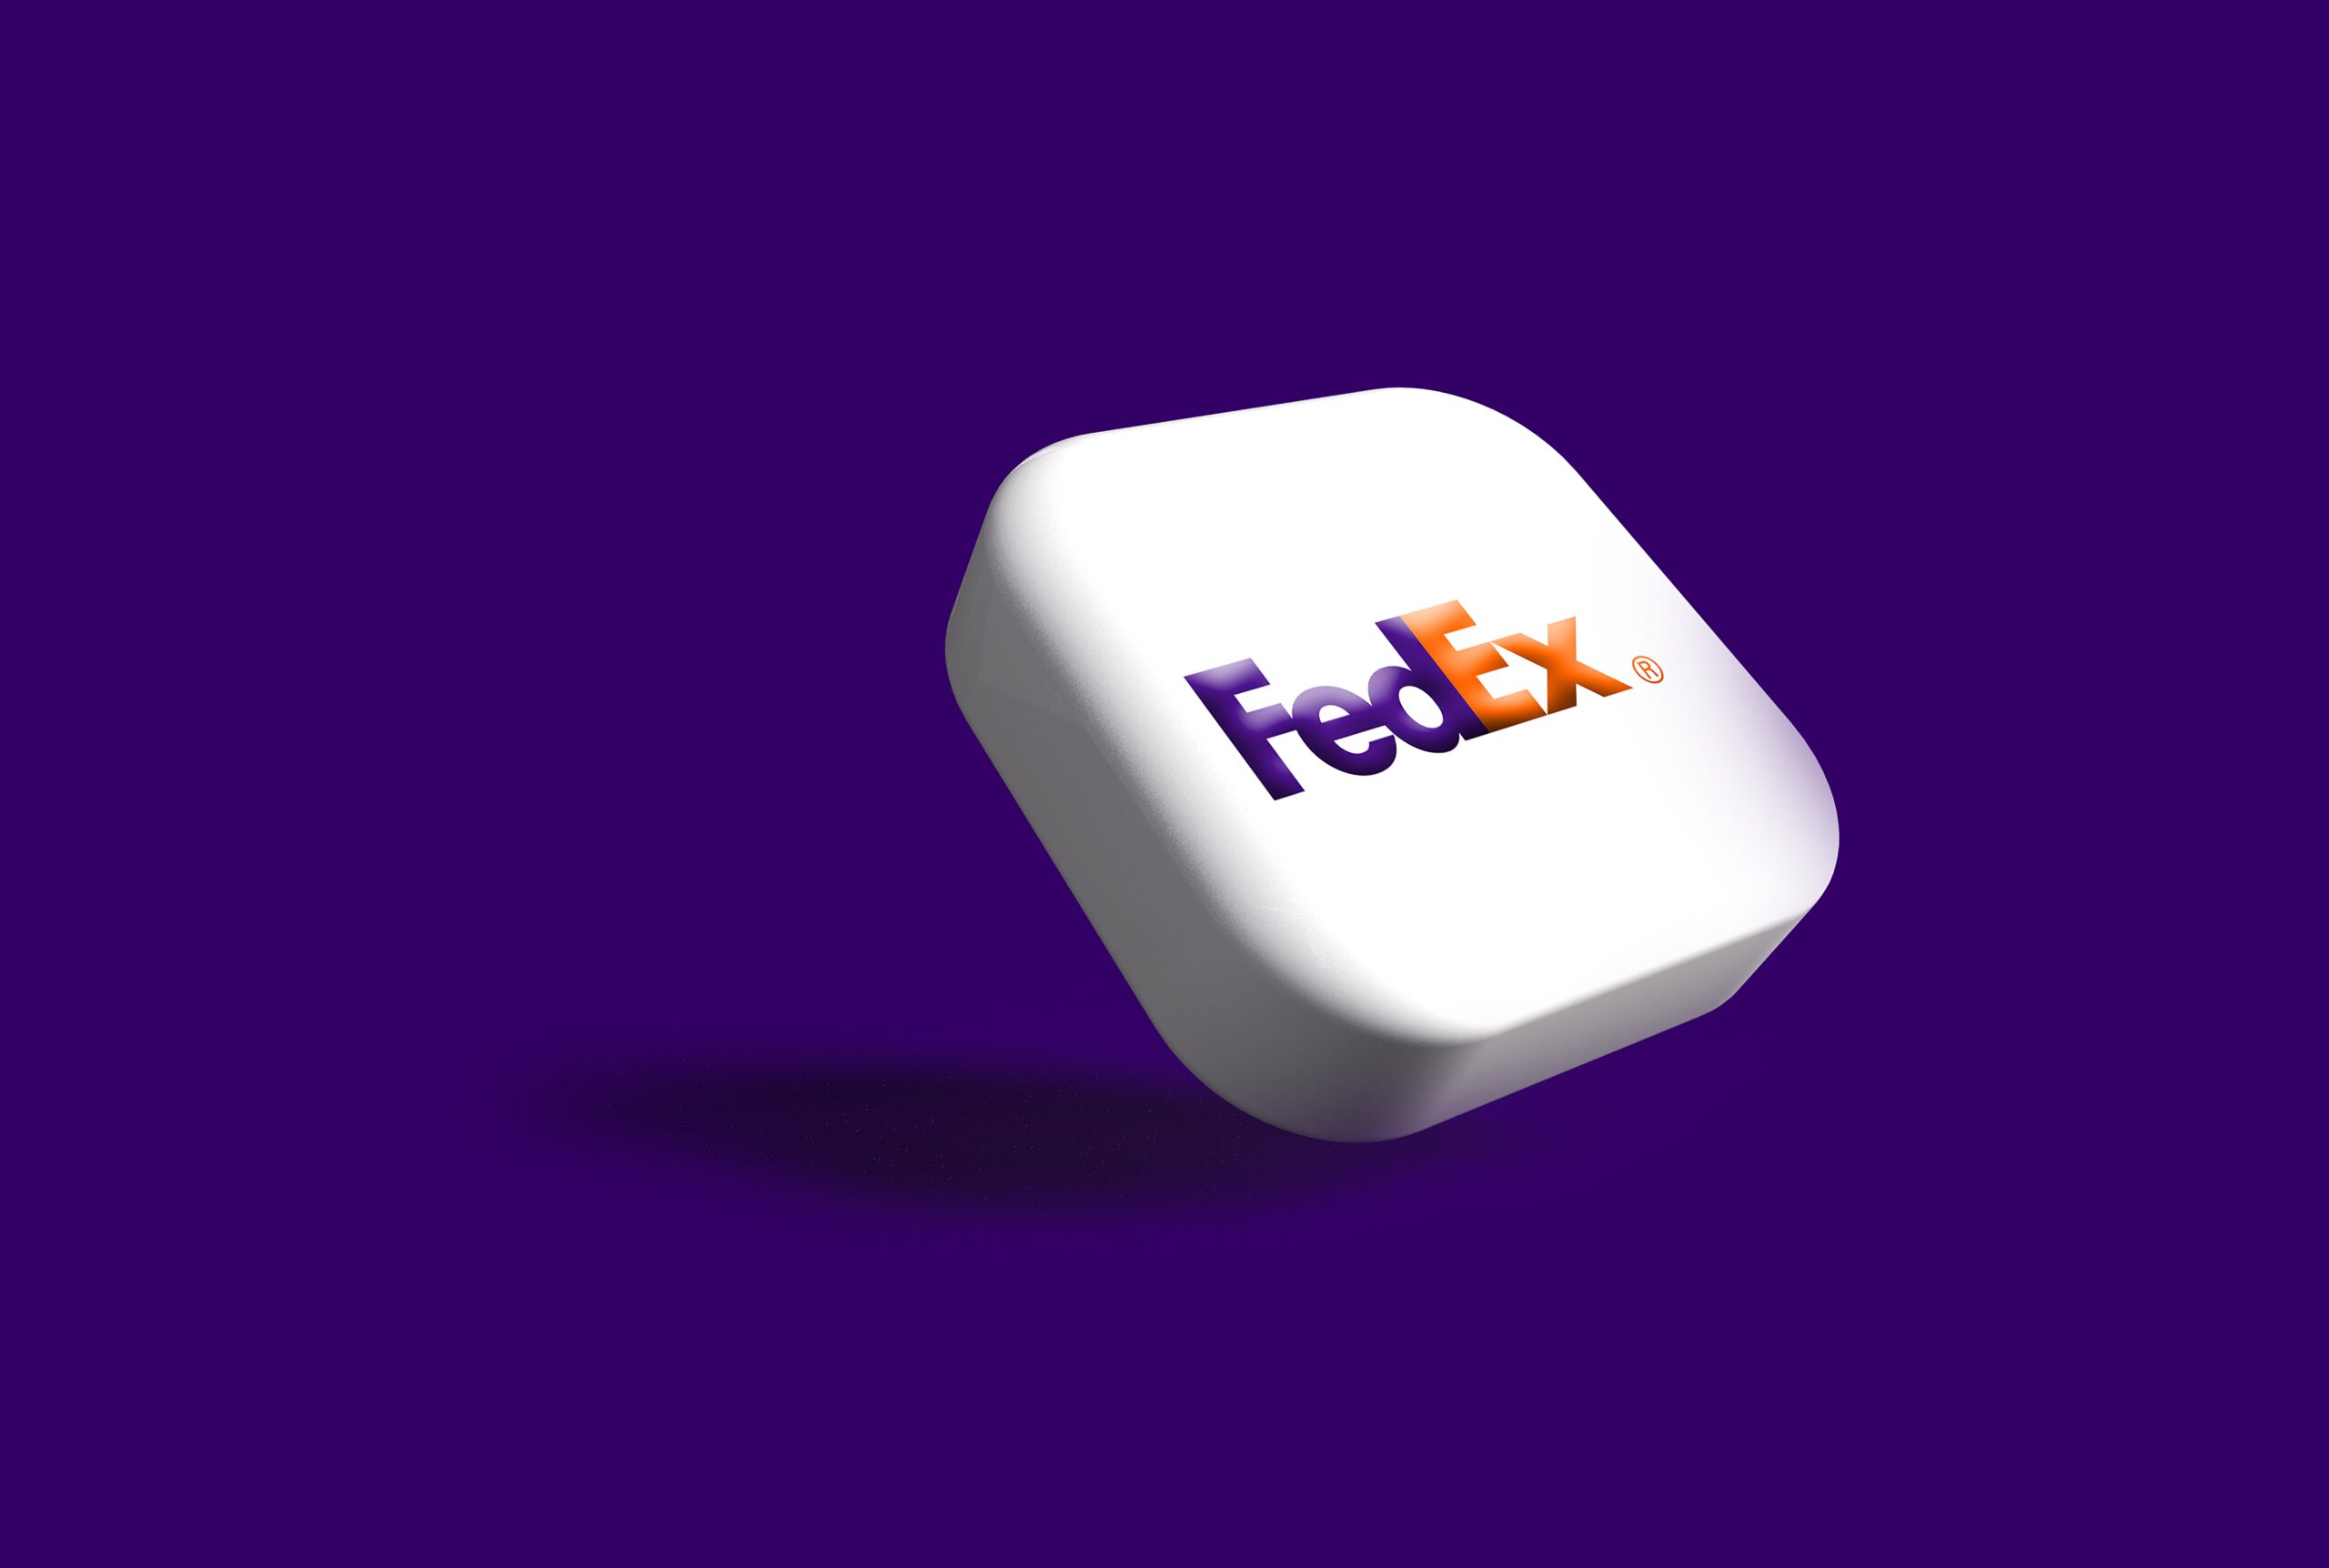 Fedex Logo: A Masterclass in Corporate Branding